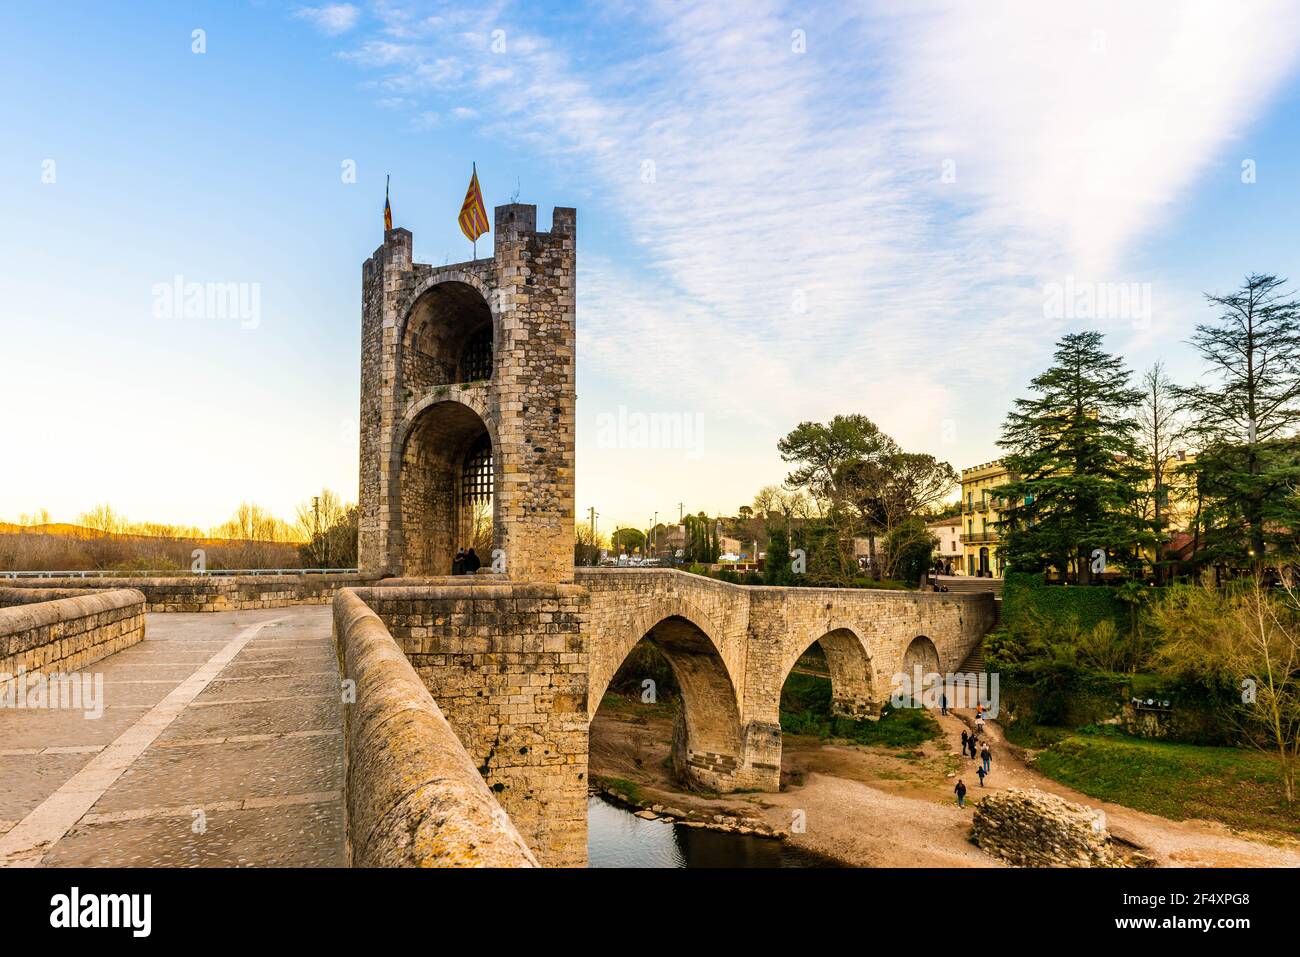 Beautiful medieval bridge in Besalu, Catalonia, Spain Stock Photo